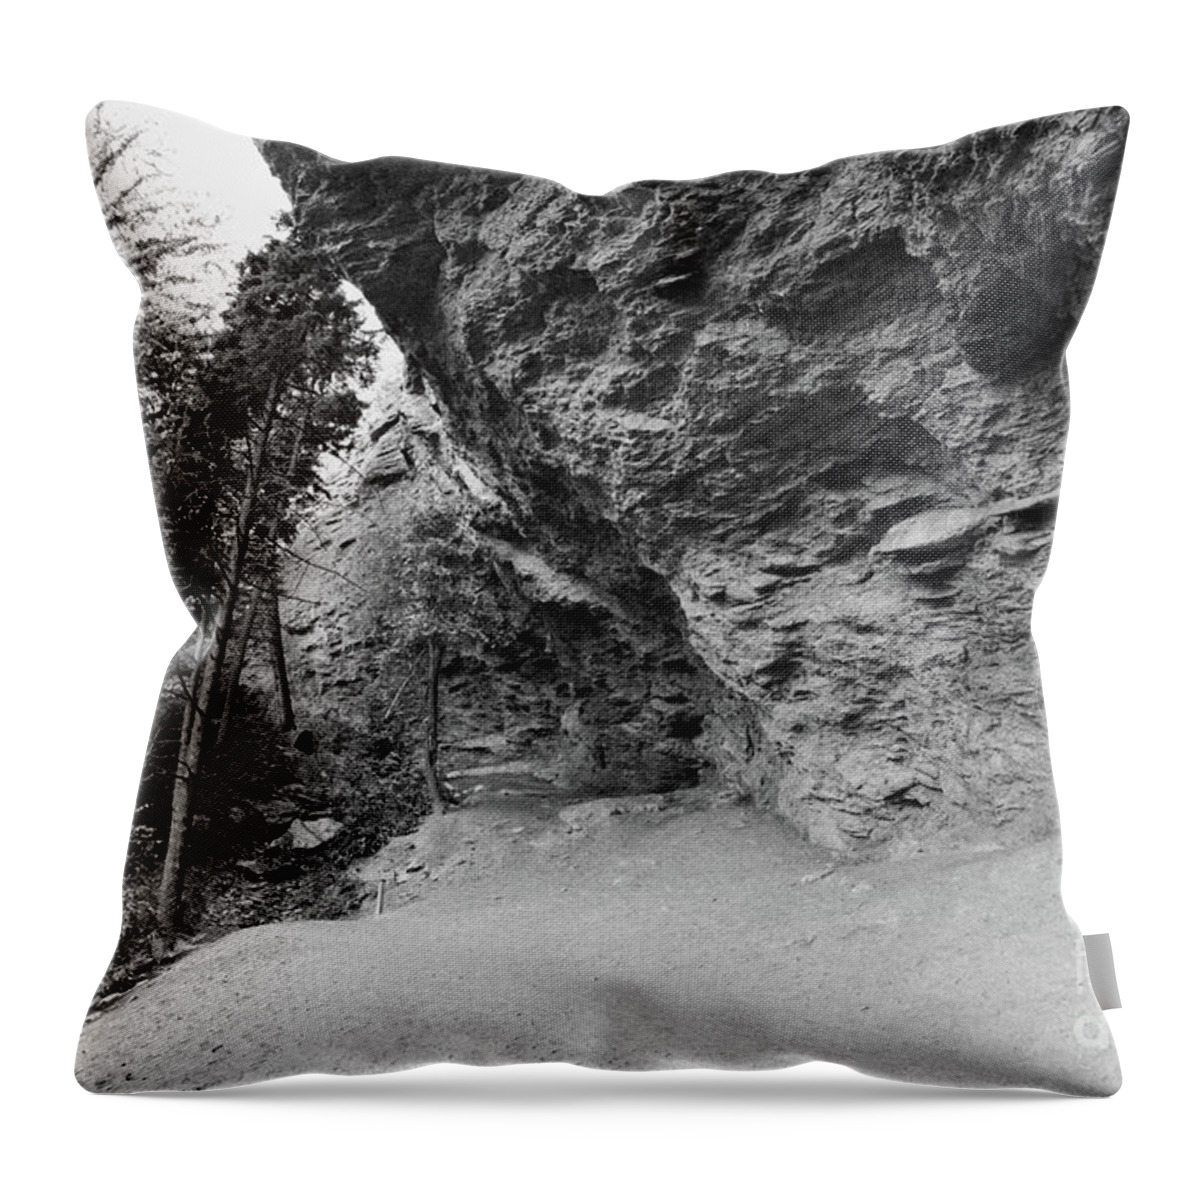 Alum Cave Bluffs Throw Pillow featuring the photograph Alum Cave Bluffs by Phil Perkins